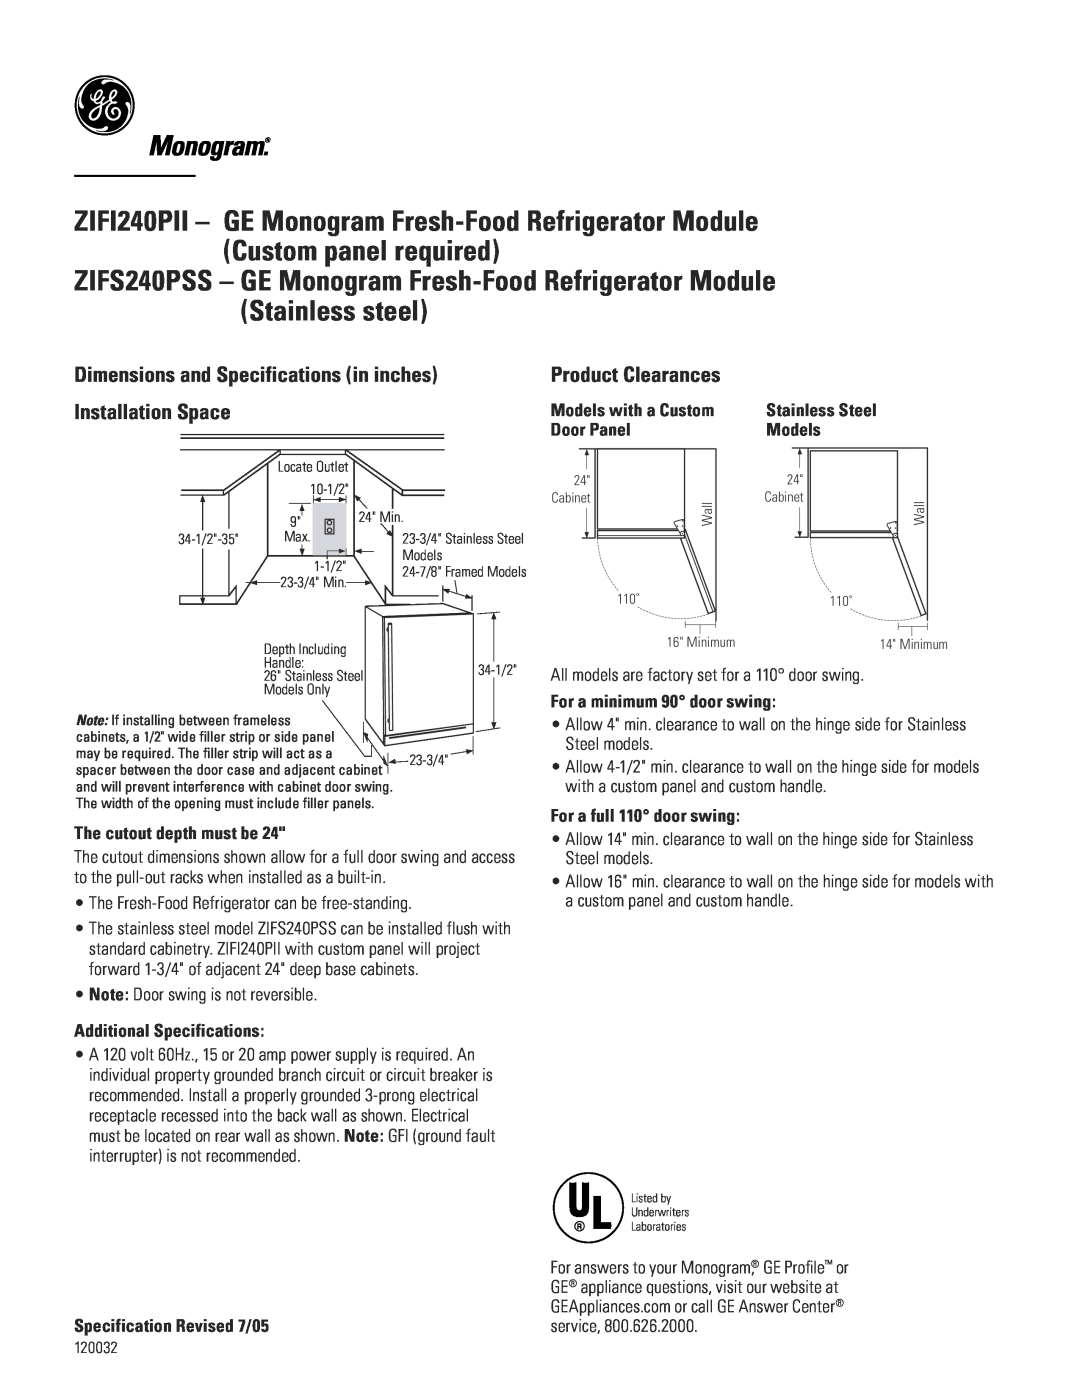 GE ZIFS240PLSS dimensions ZIFI240PII - GE Monogram Fresh-Food Refrigerator Module, Custom panel required, Stainless steel 